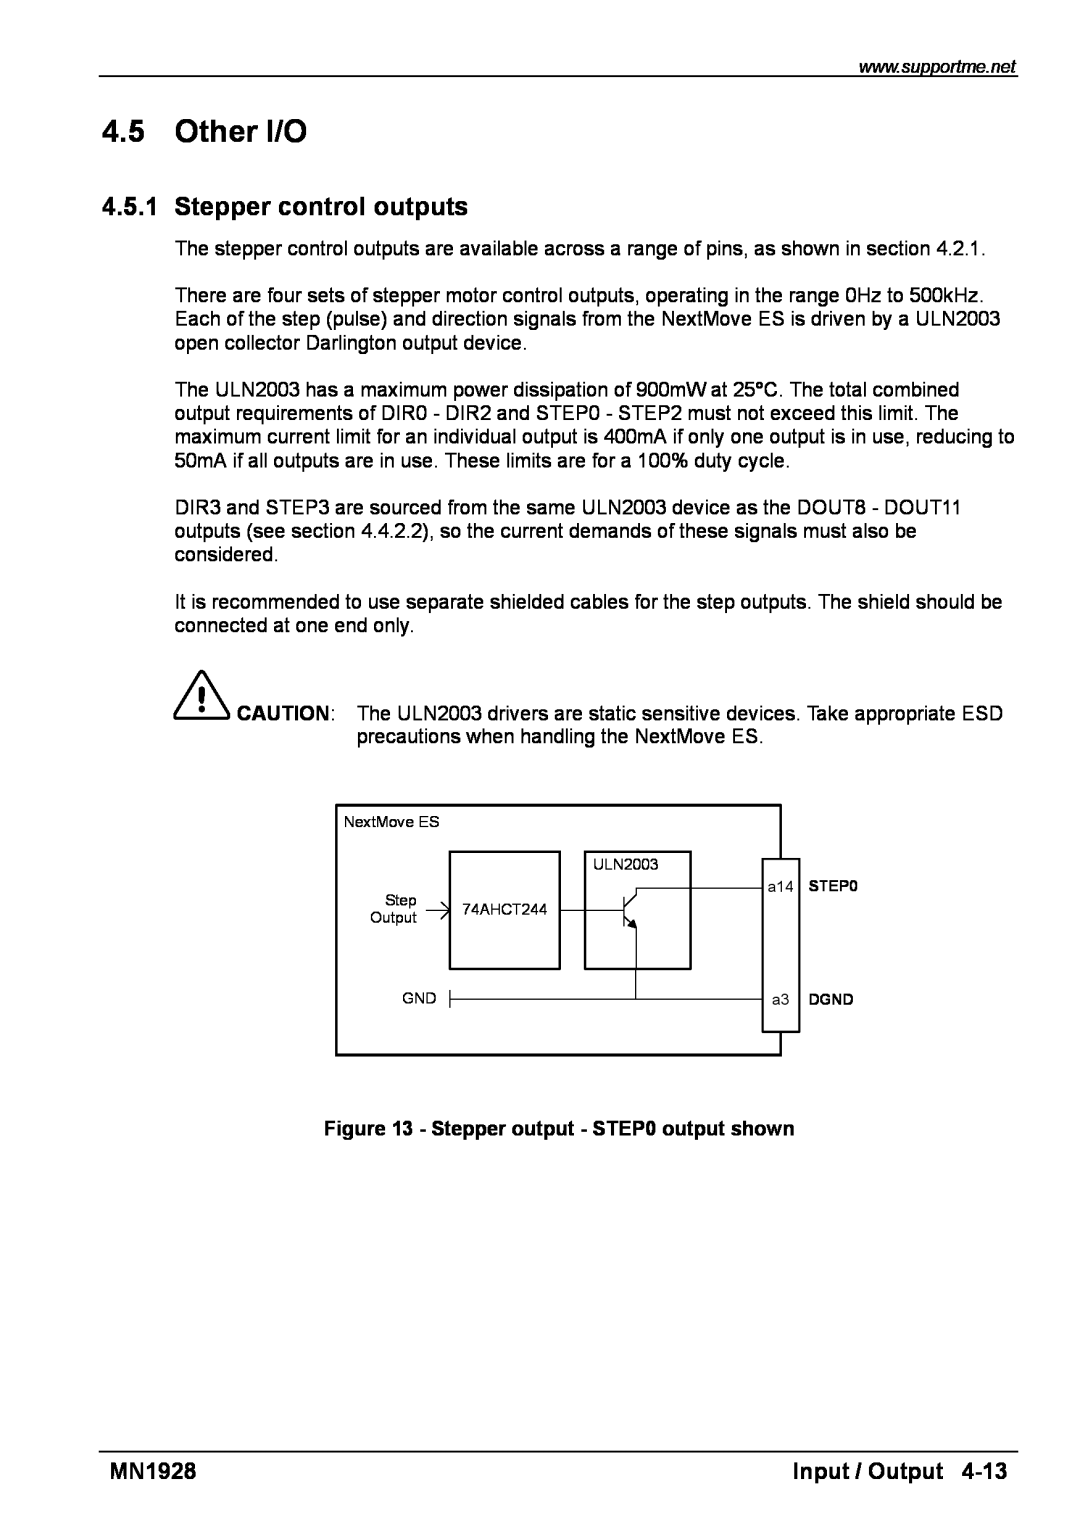 Baldor MN1928 installation manual Other I/O, Stepper control outputs, Input / Output, Stepper output - output shown 